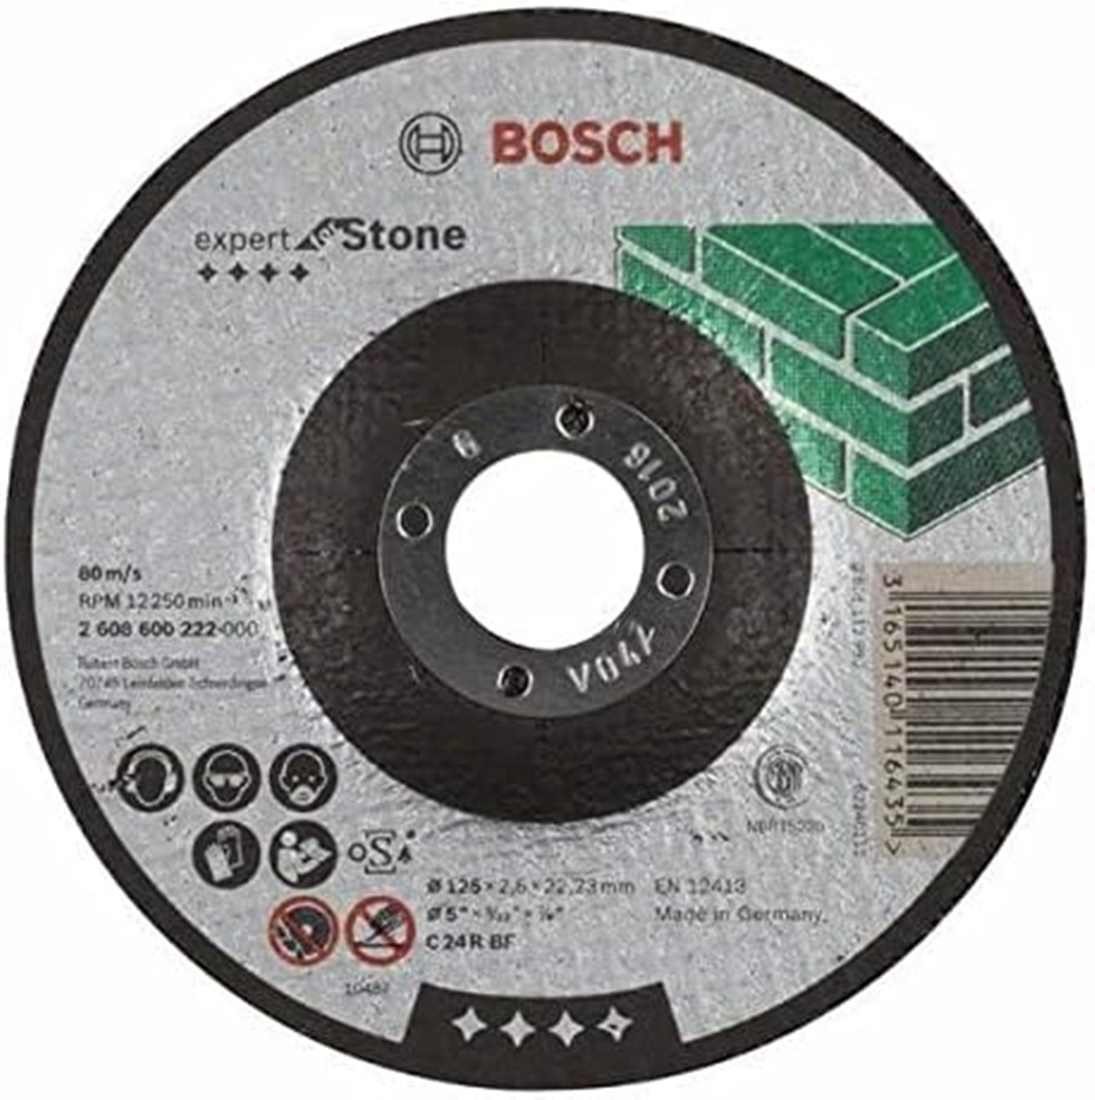 Granit, 2.5 Ø Trennscheibe BOSCH R mm, C mm 24 Bosch Stein, Expert 125 BF, Bohrfutter